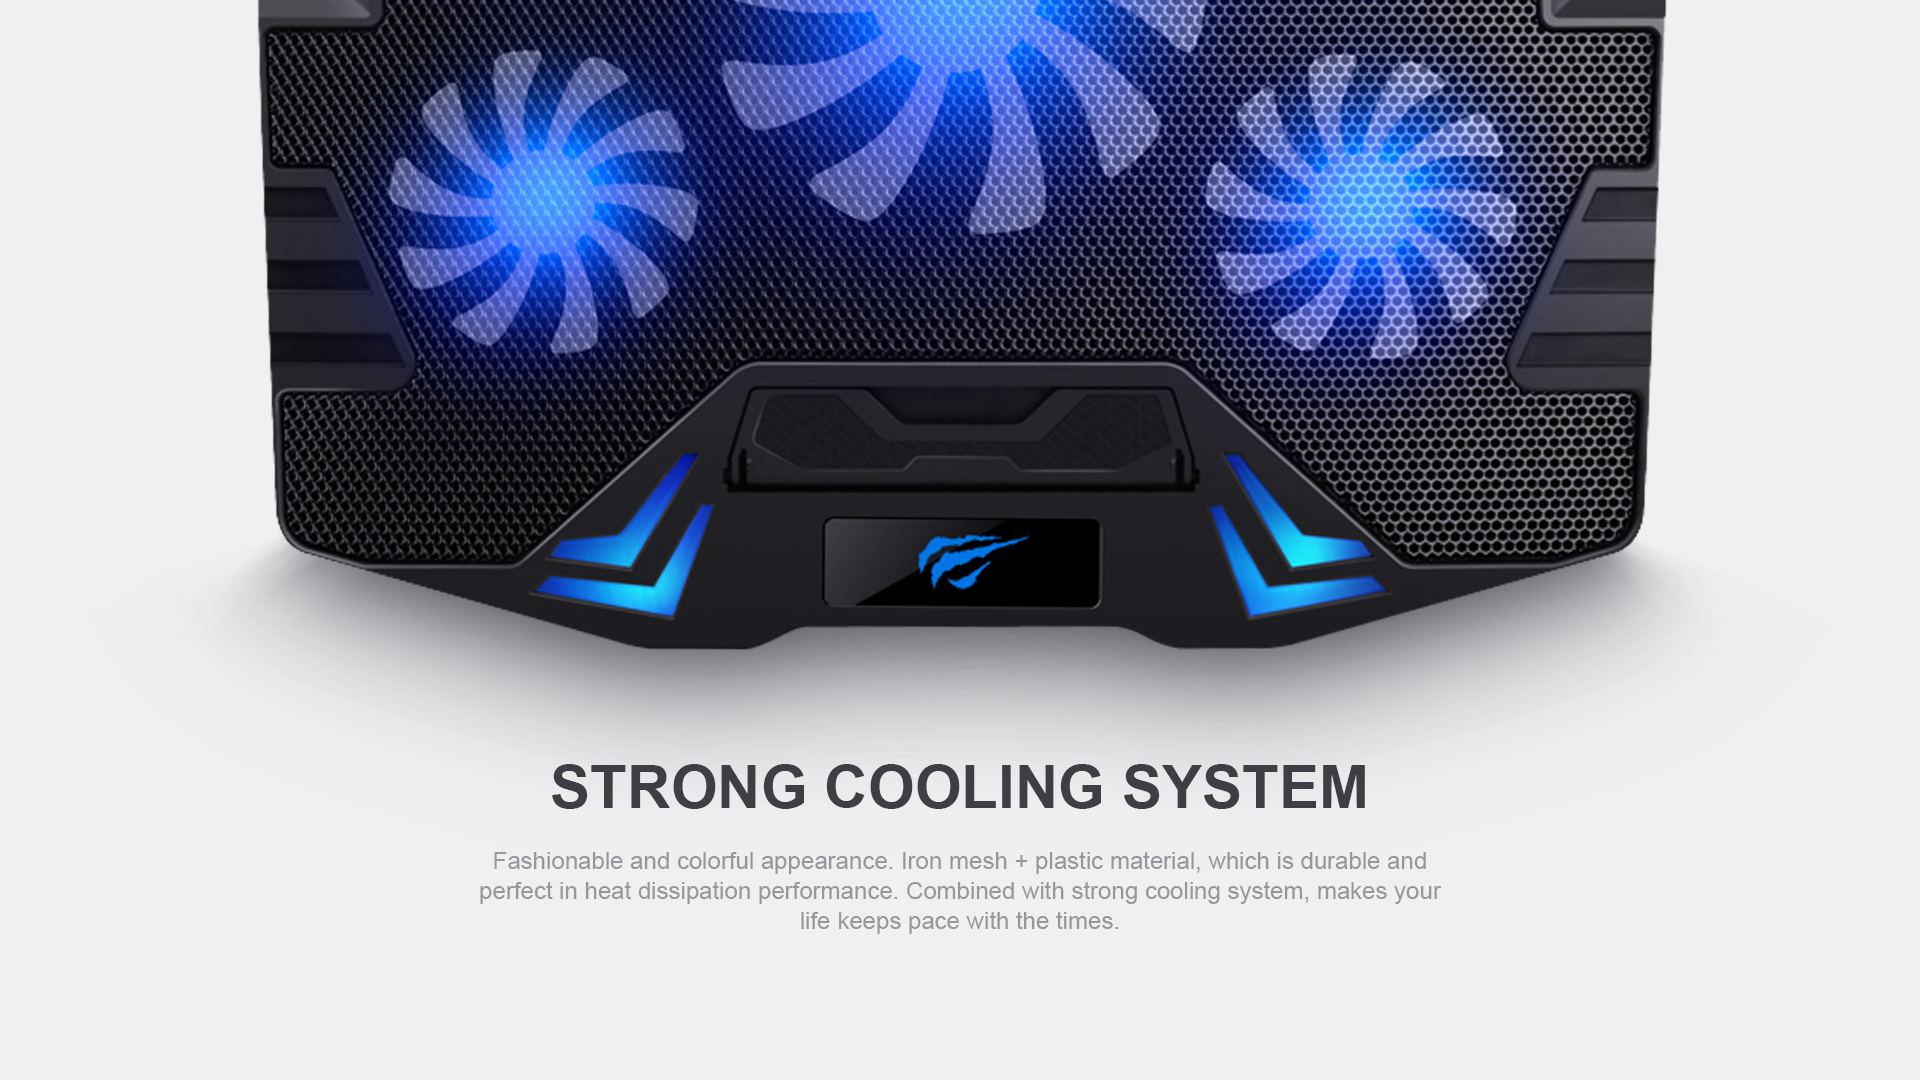 F2082 Gaming Cooling Pad